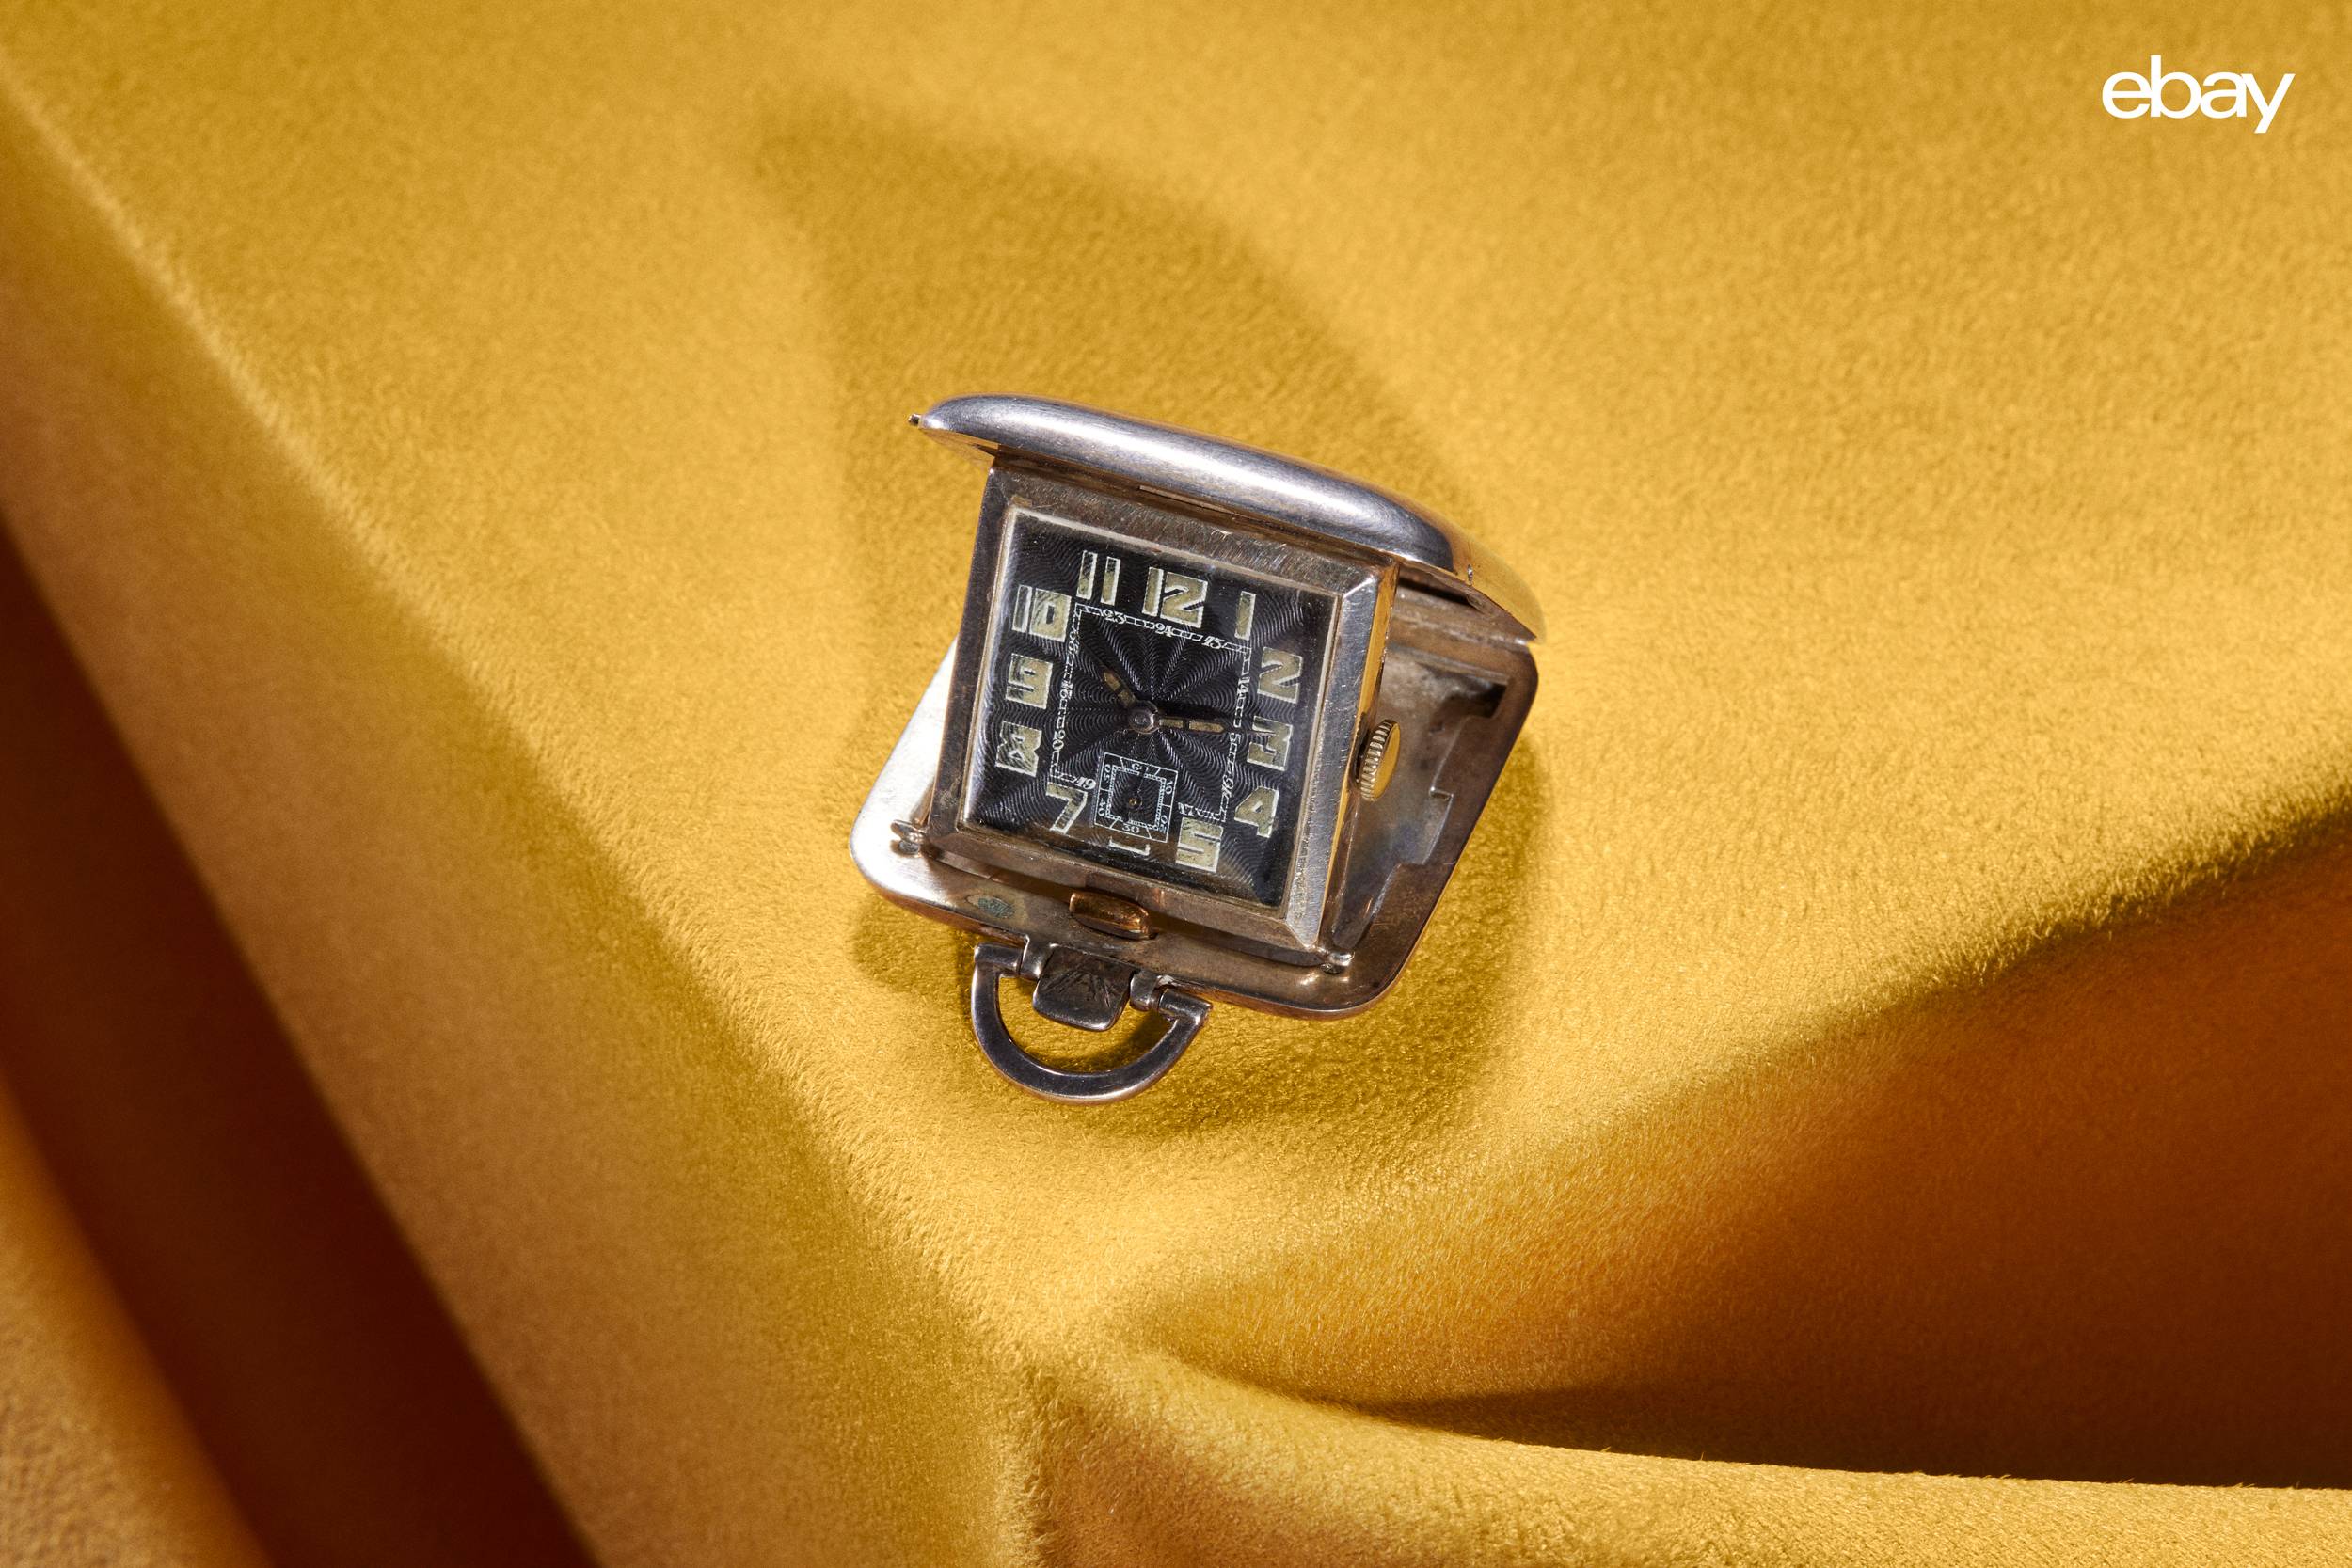 Steve Martin's 1934 fine swiss ss travel watch, available on ebay